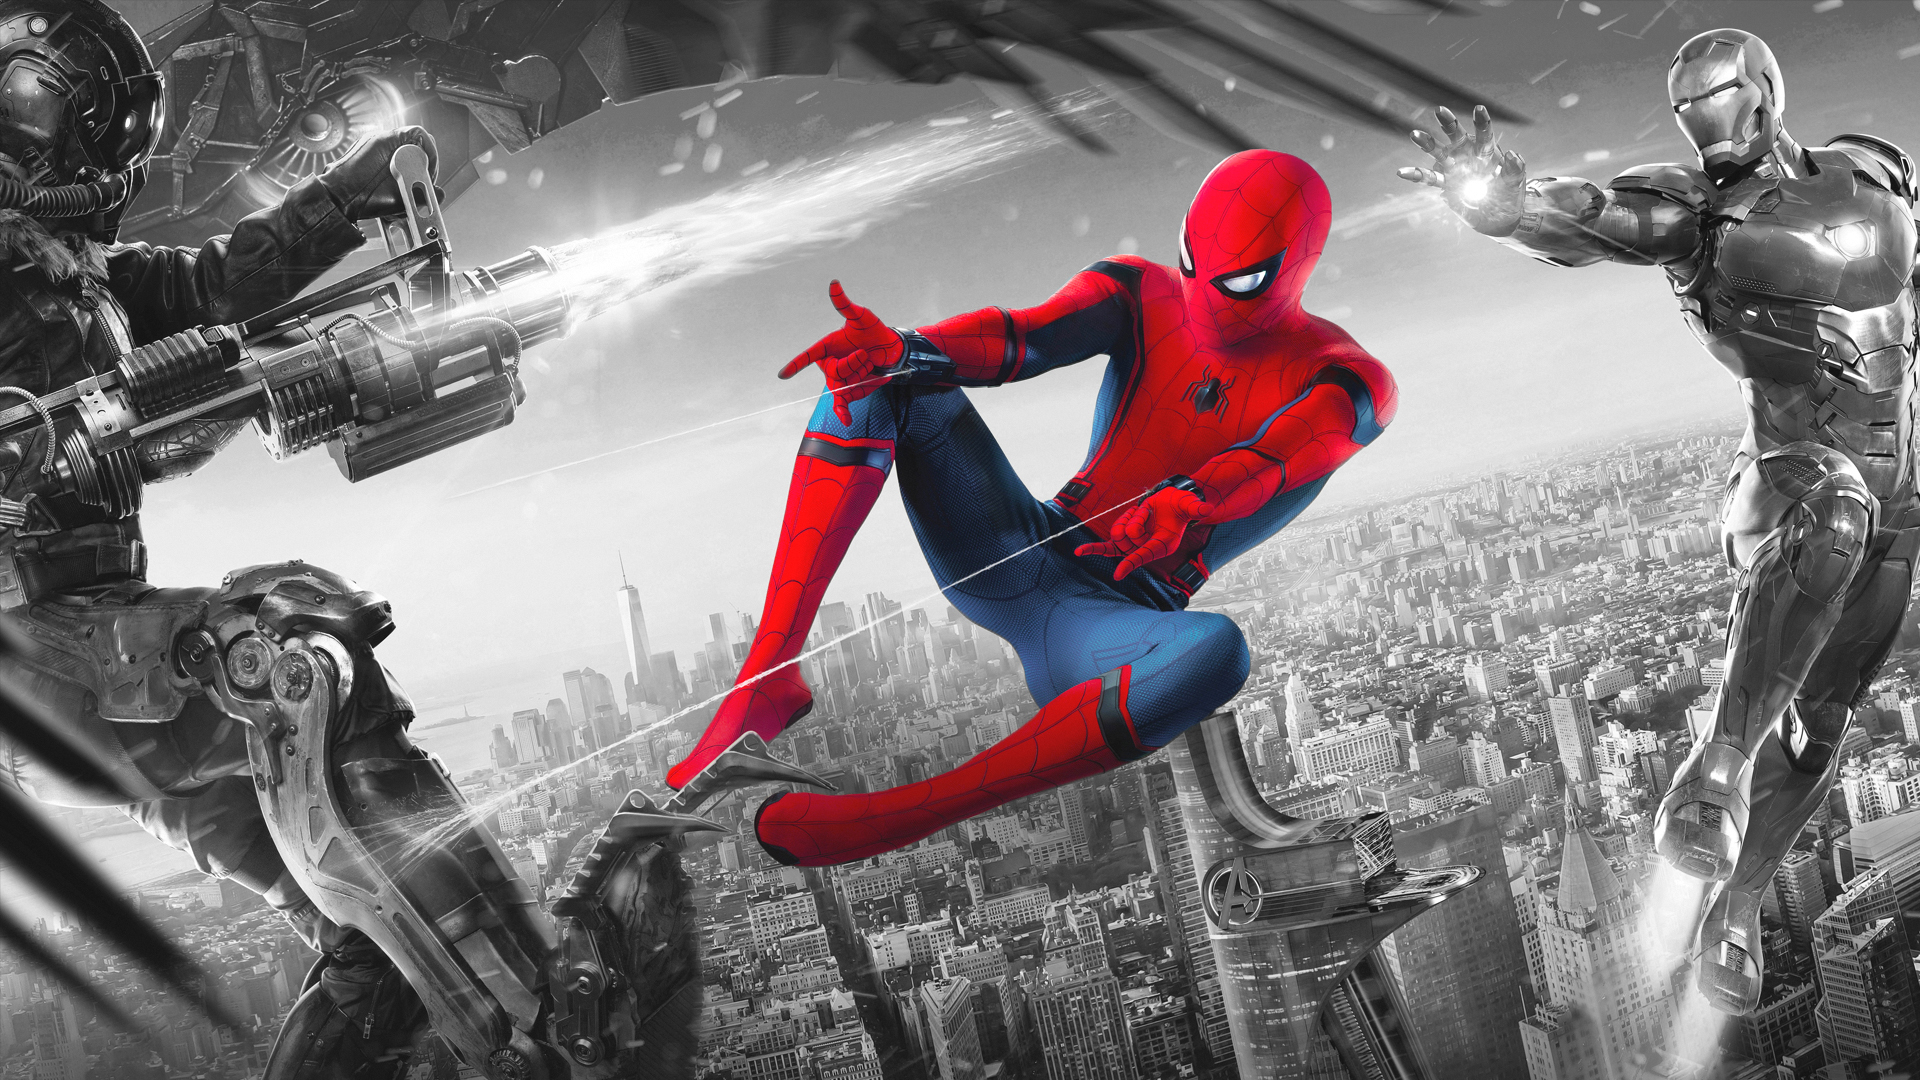 Spider Man Spider Man Homecoming Movie Spider Man Homecoming 2017 Peter Parker Marvel Cinematic Univ 1920x1080